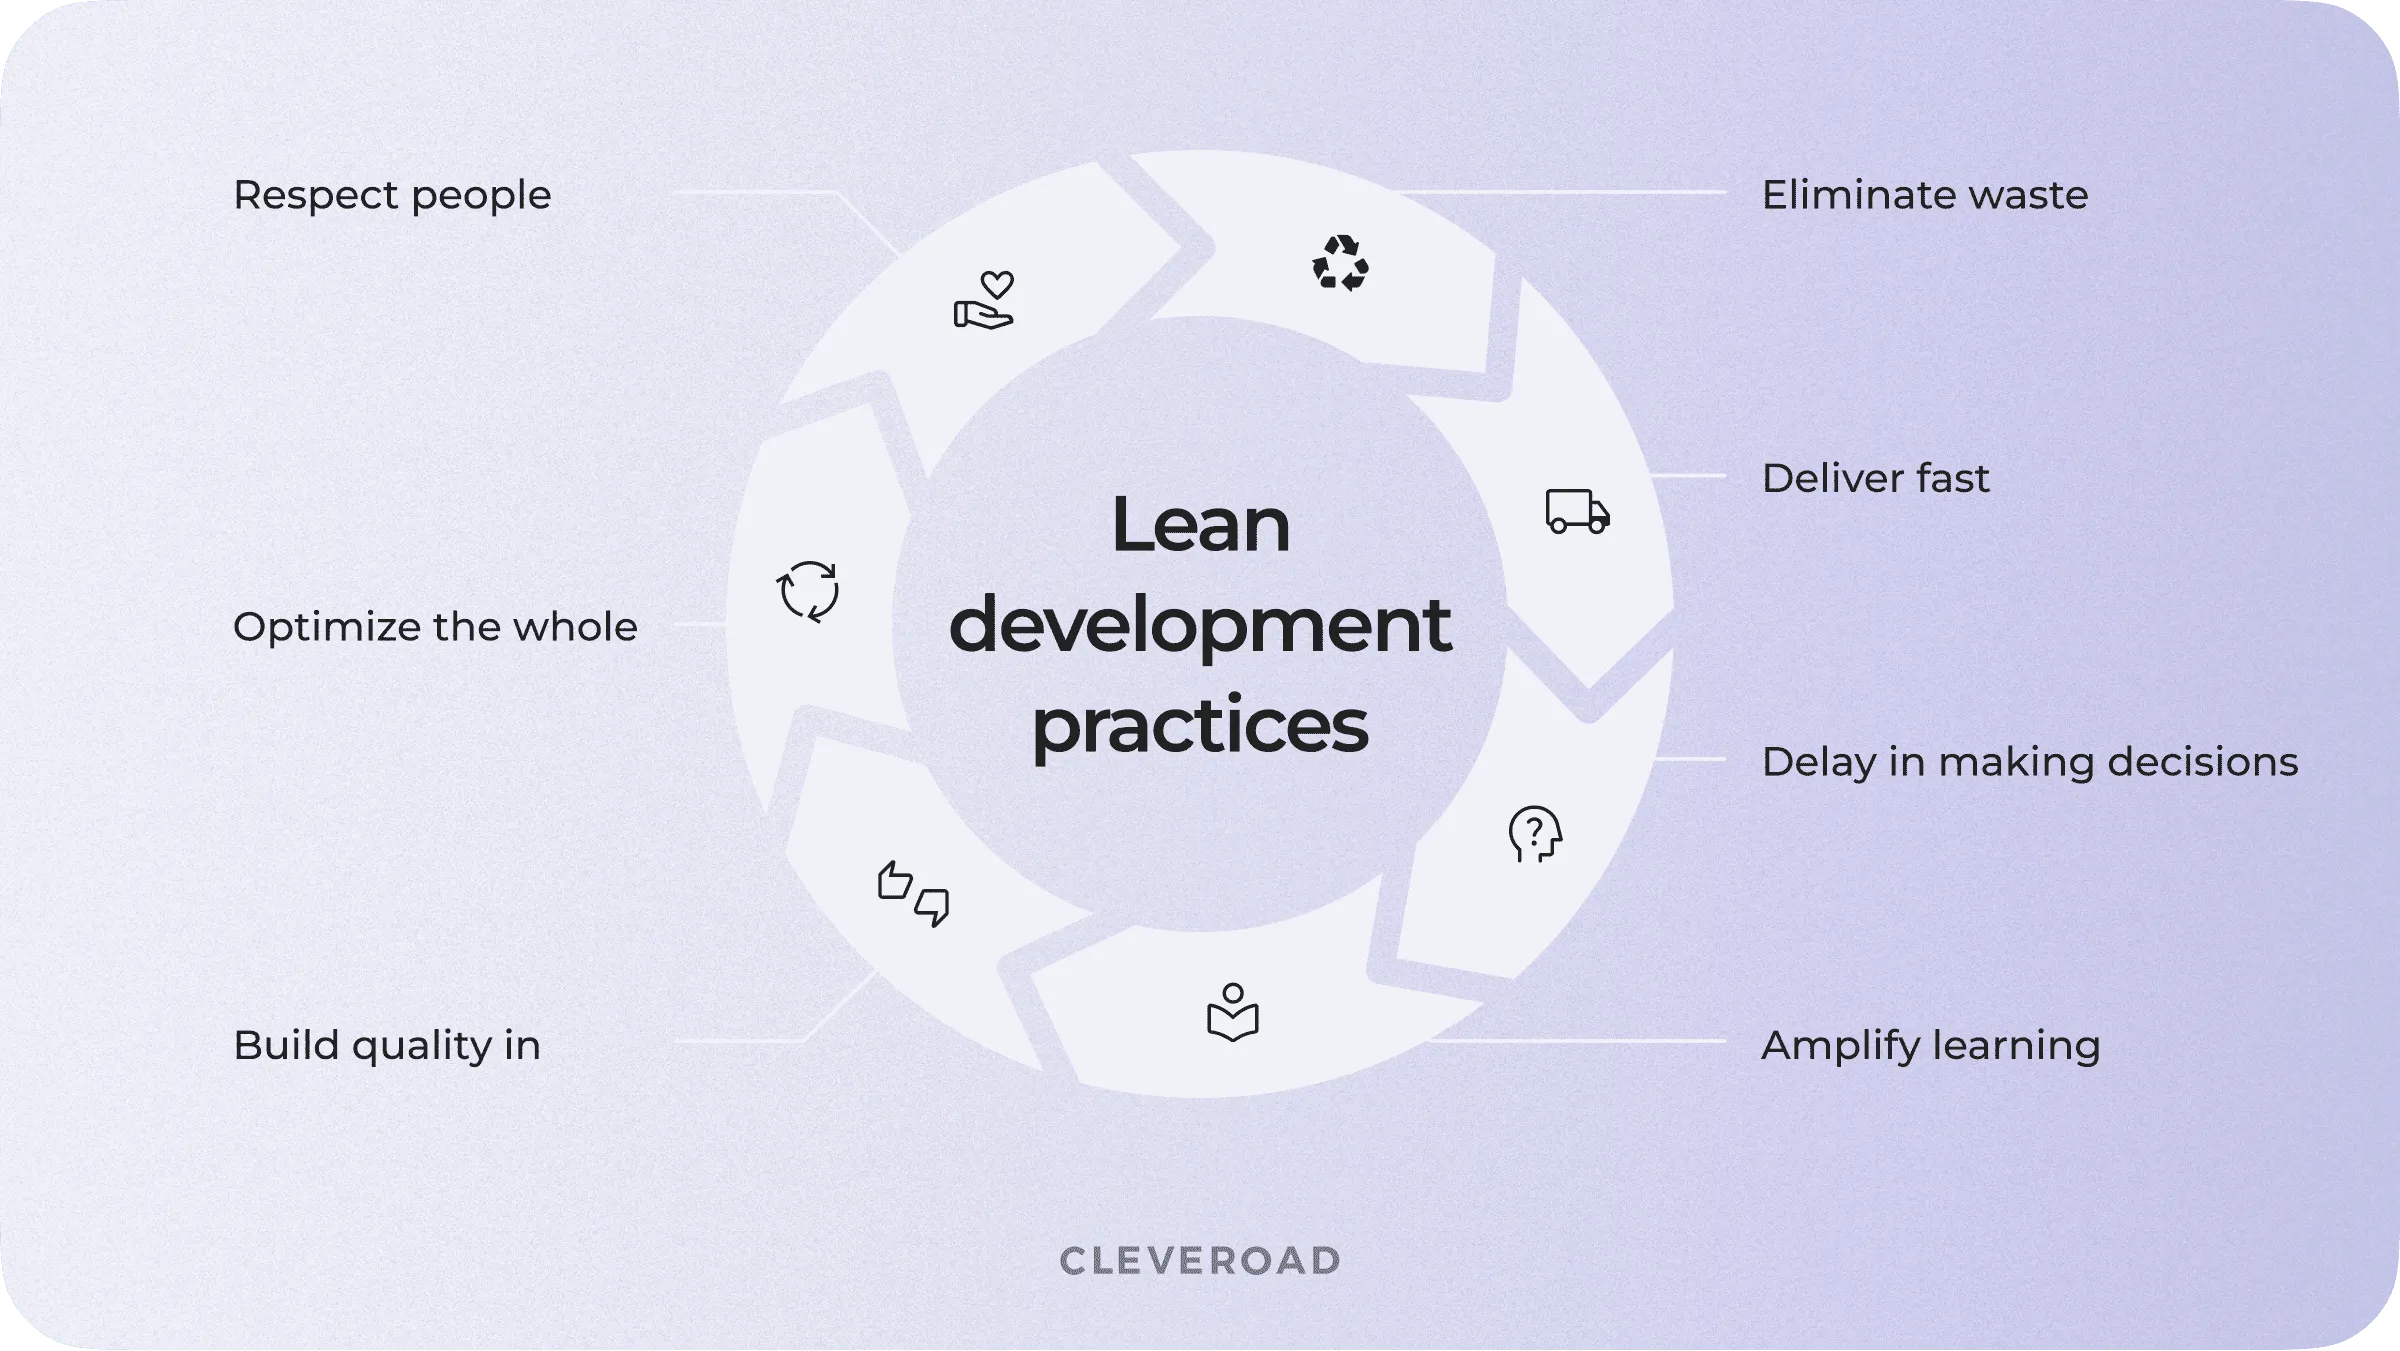 Lean development practices